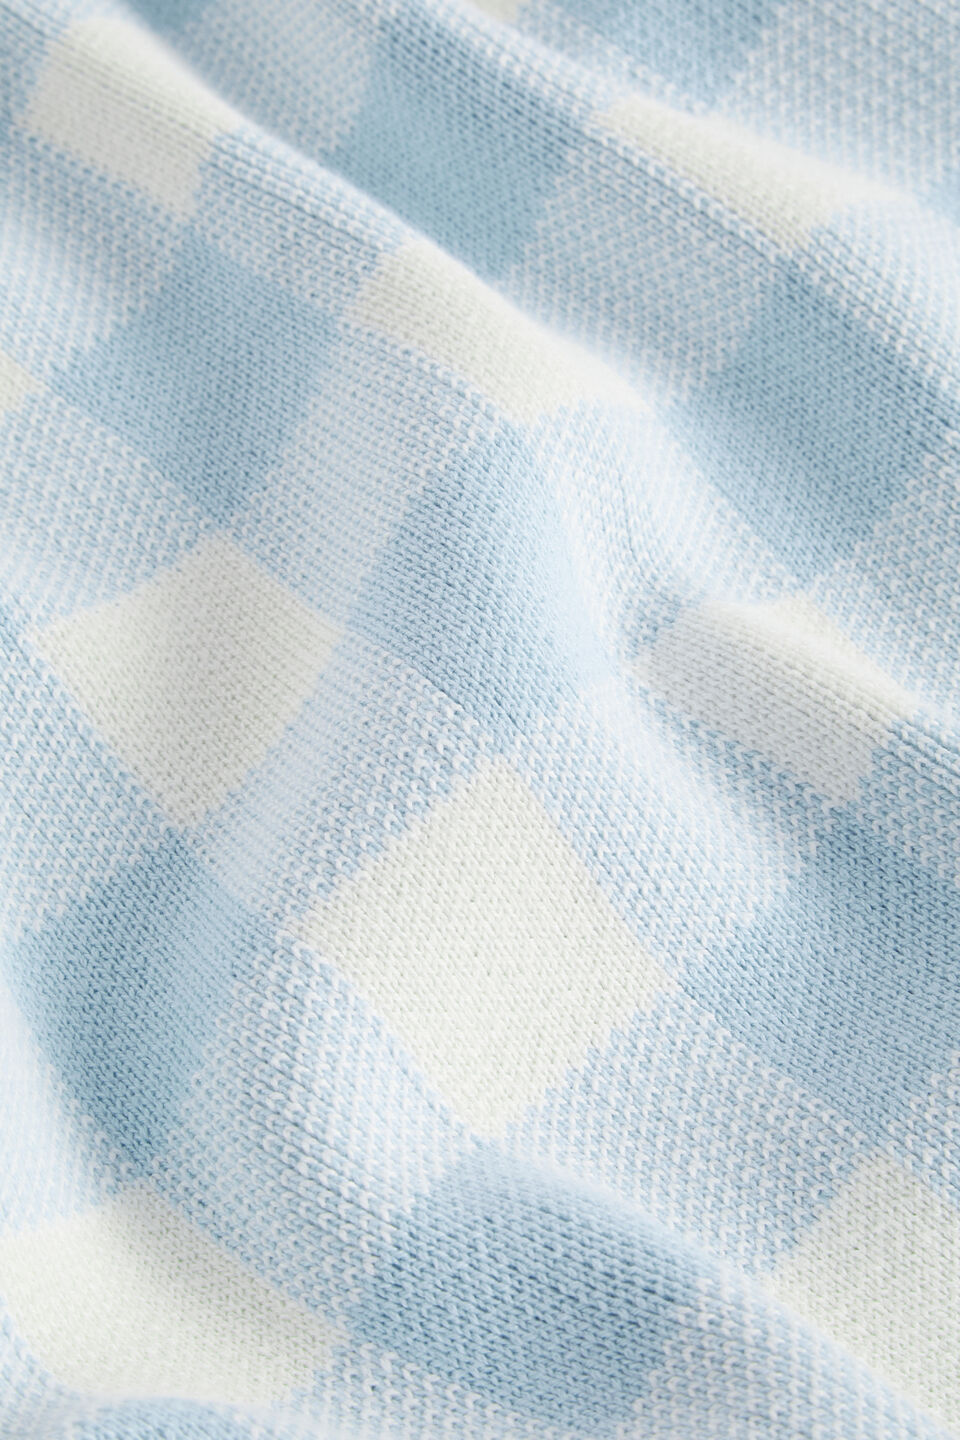 Gingham Knit Blanket  Powder Blue